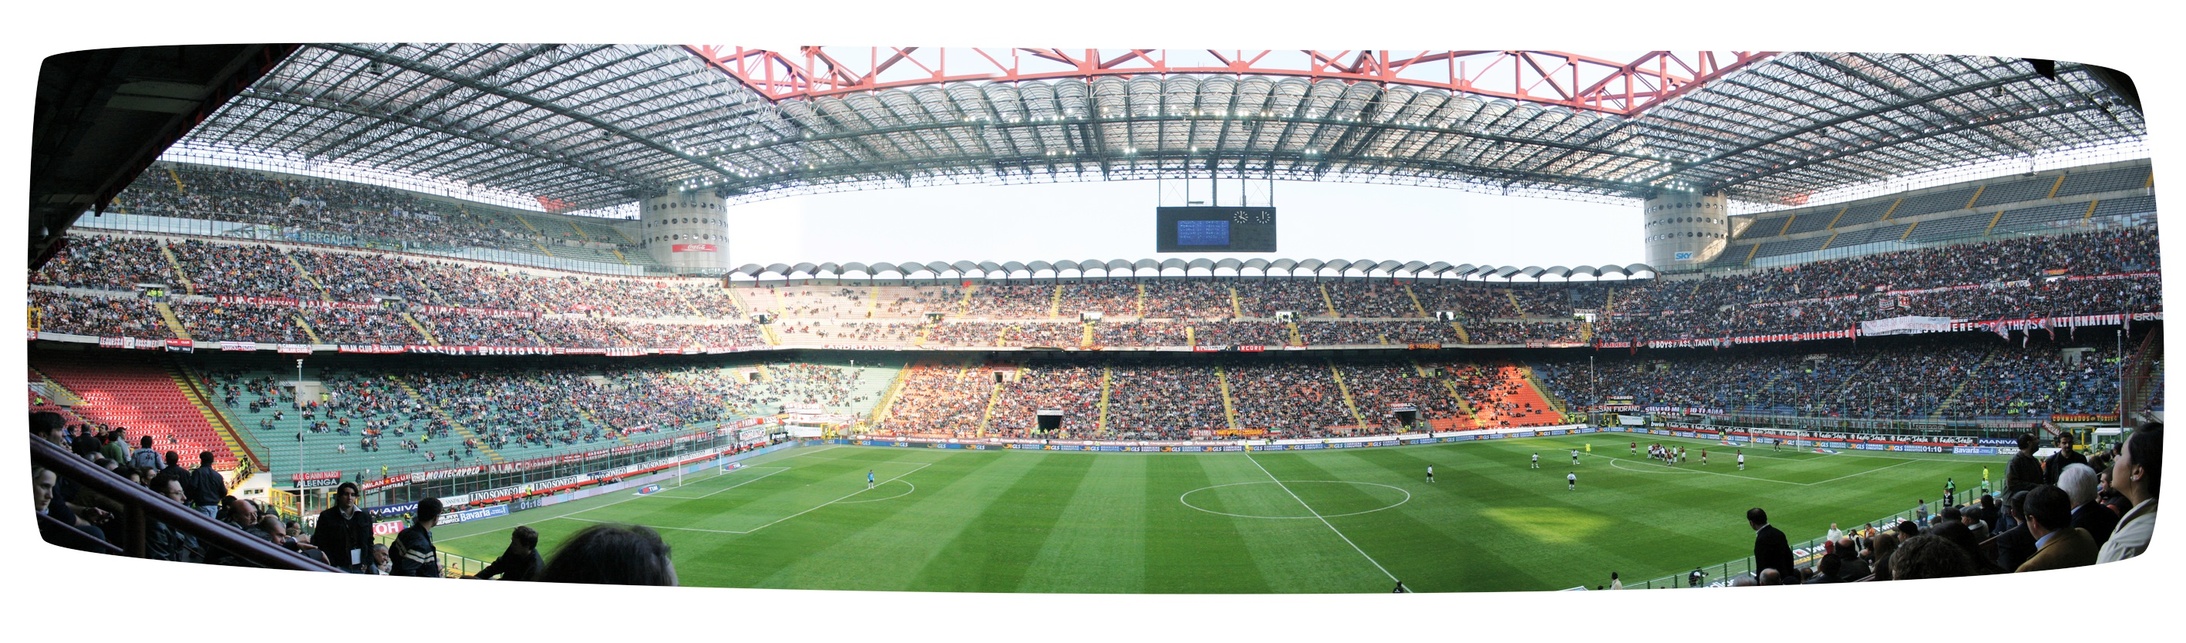 San Siro Stadion, Milánó. Forrás: Wikimedia Commons